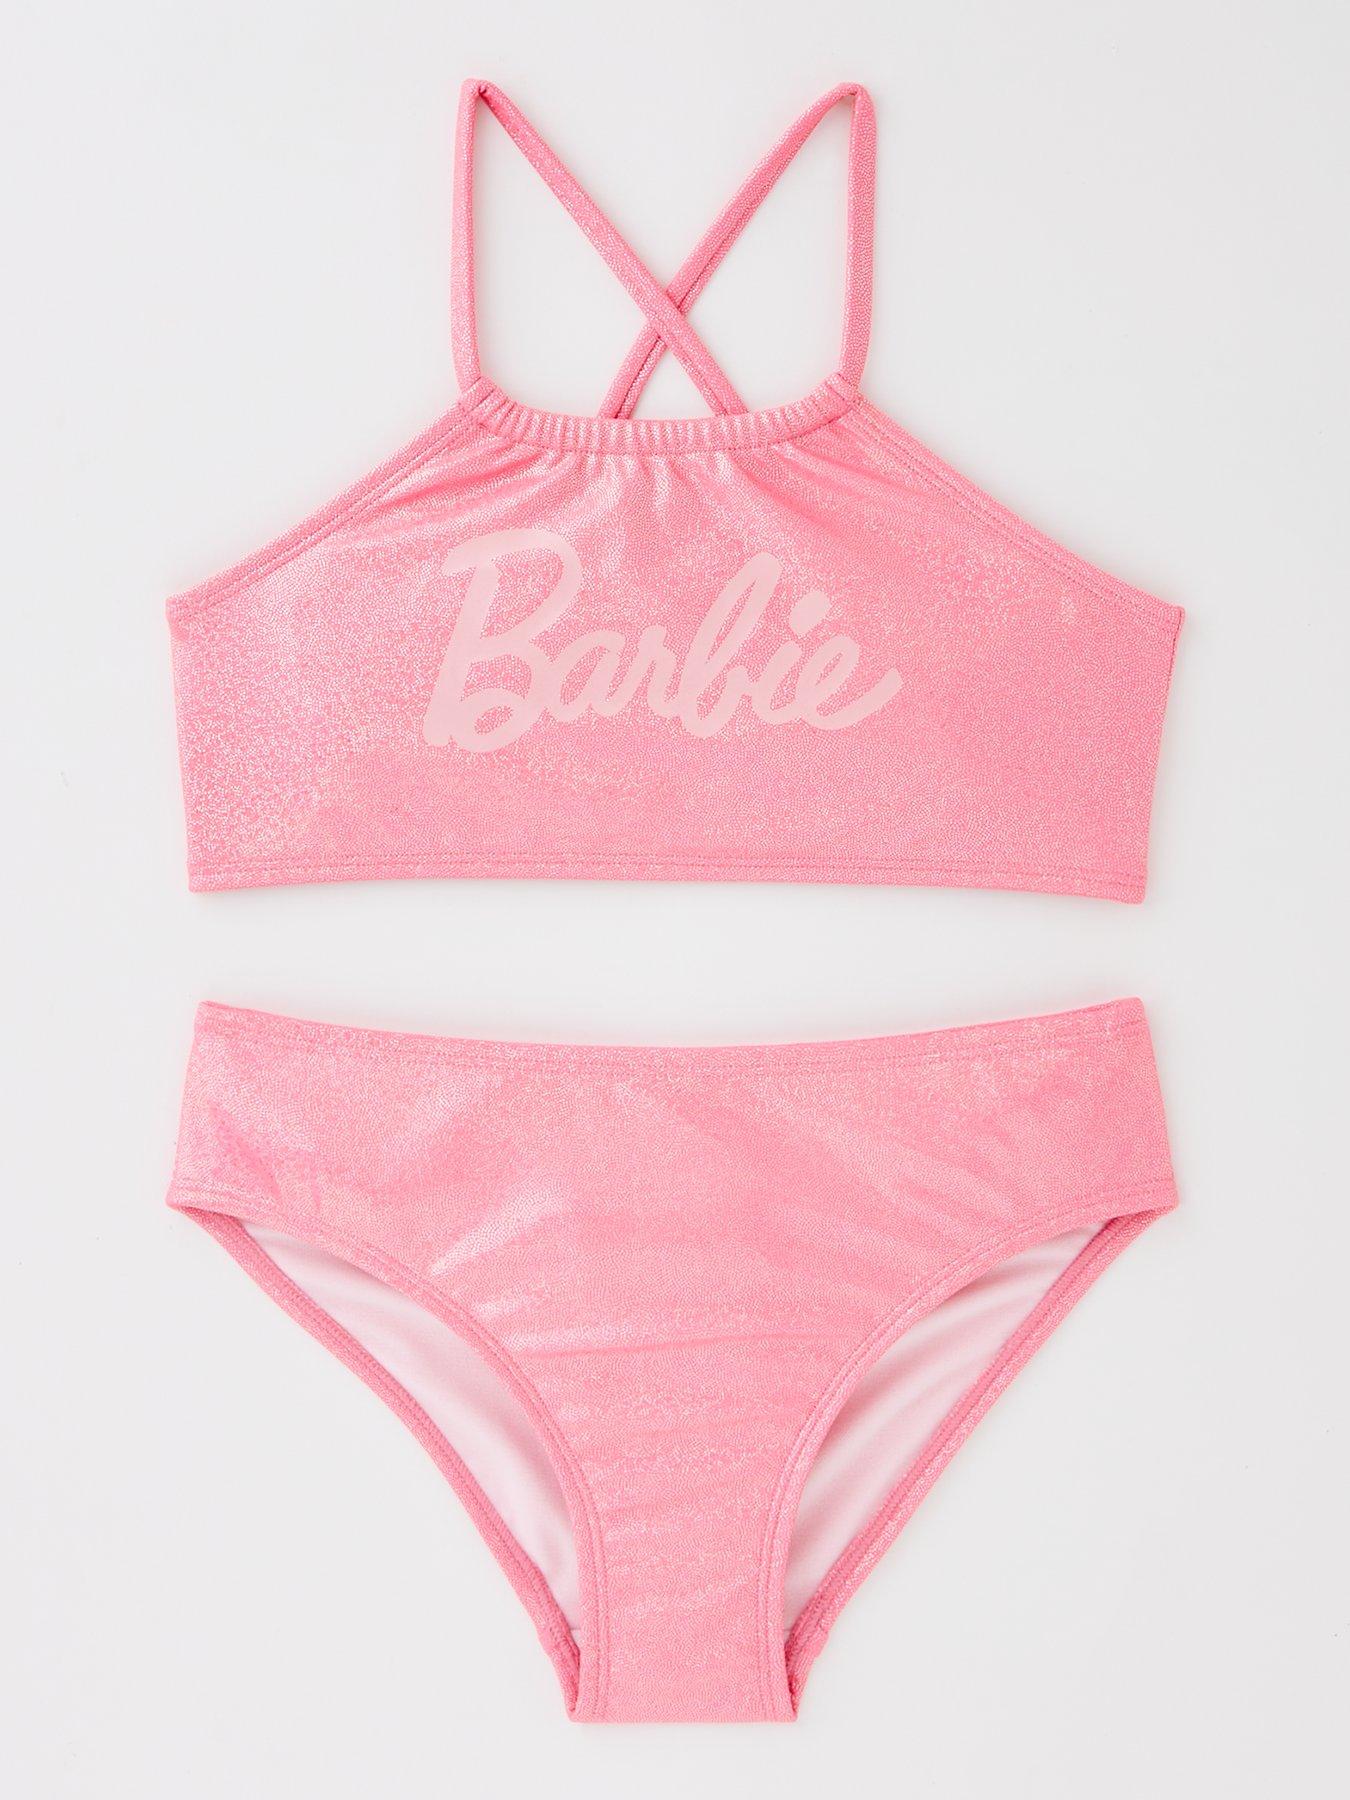 1990 Barbie Pink Sparkles Washer & Dryer 1706 Mattel Furniture Collection 